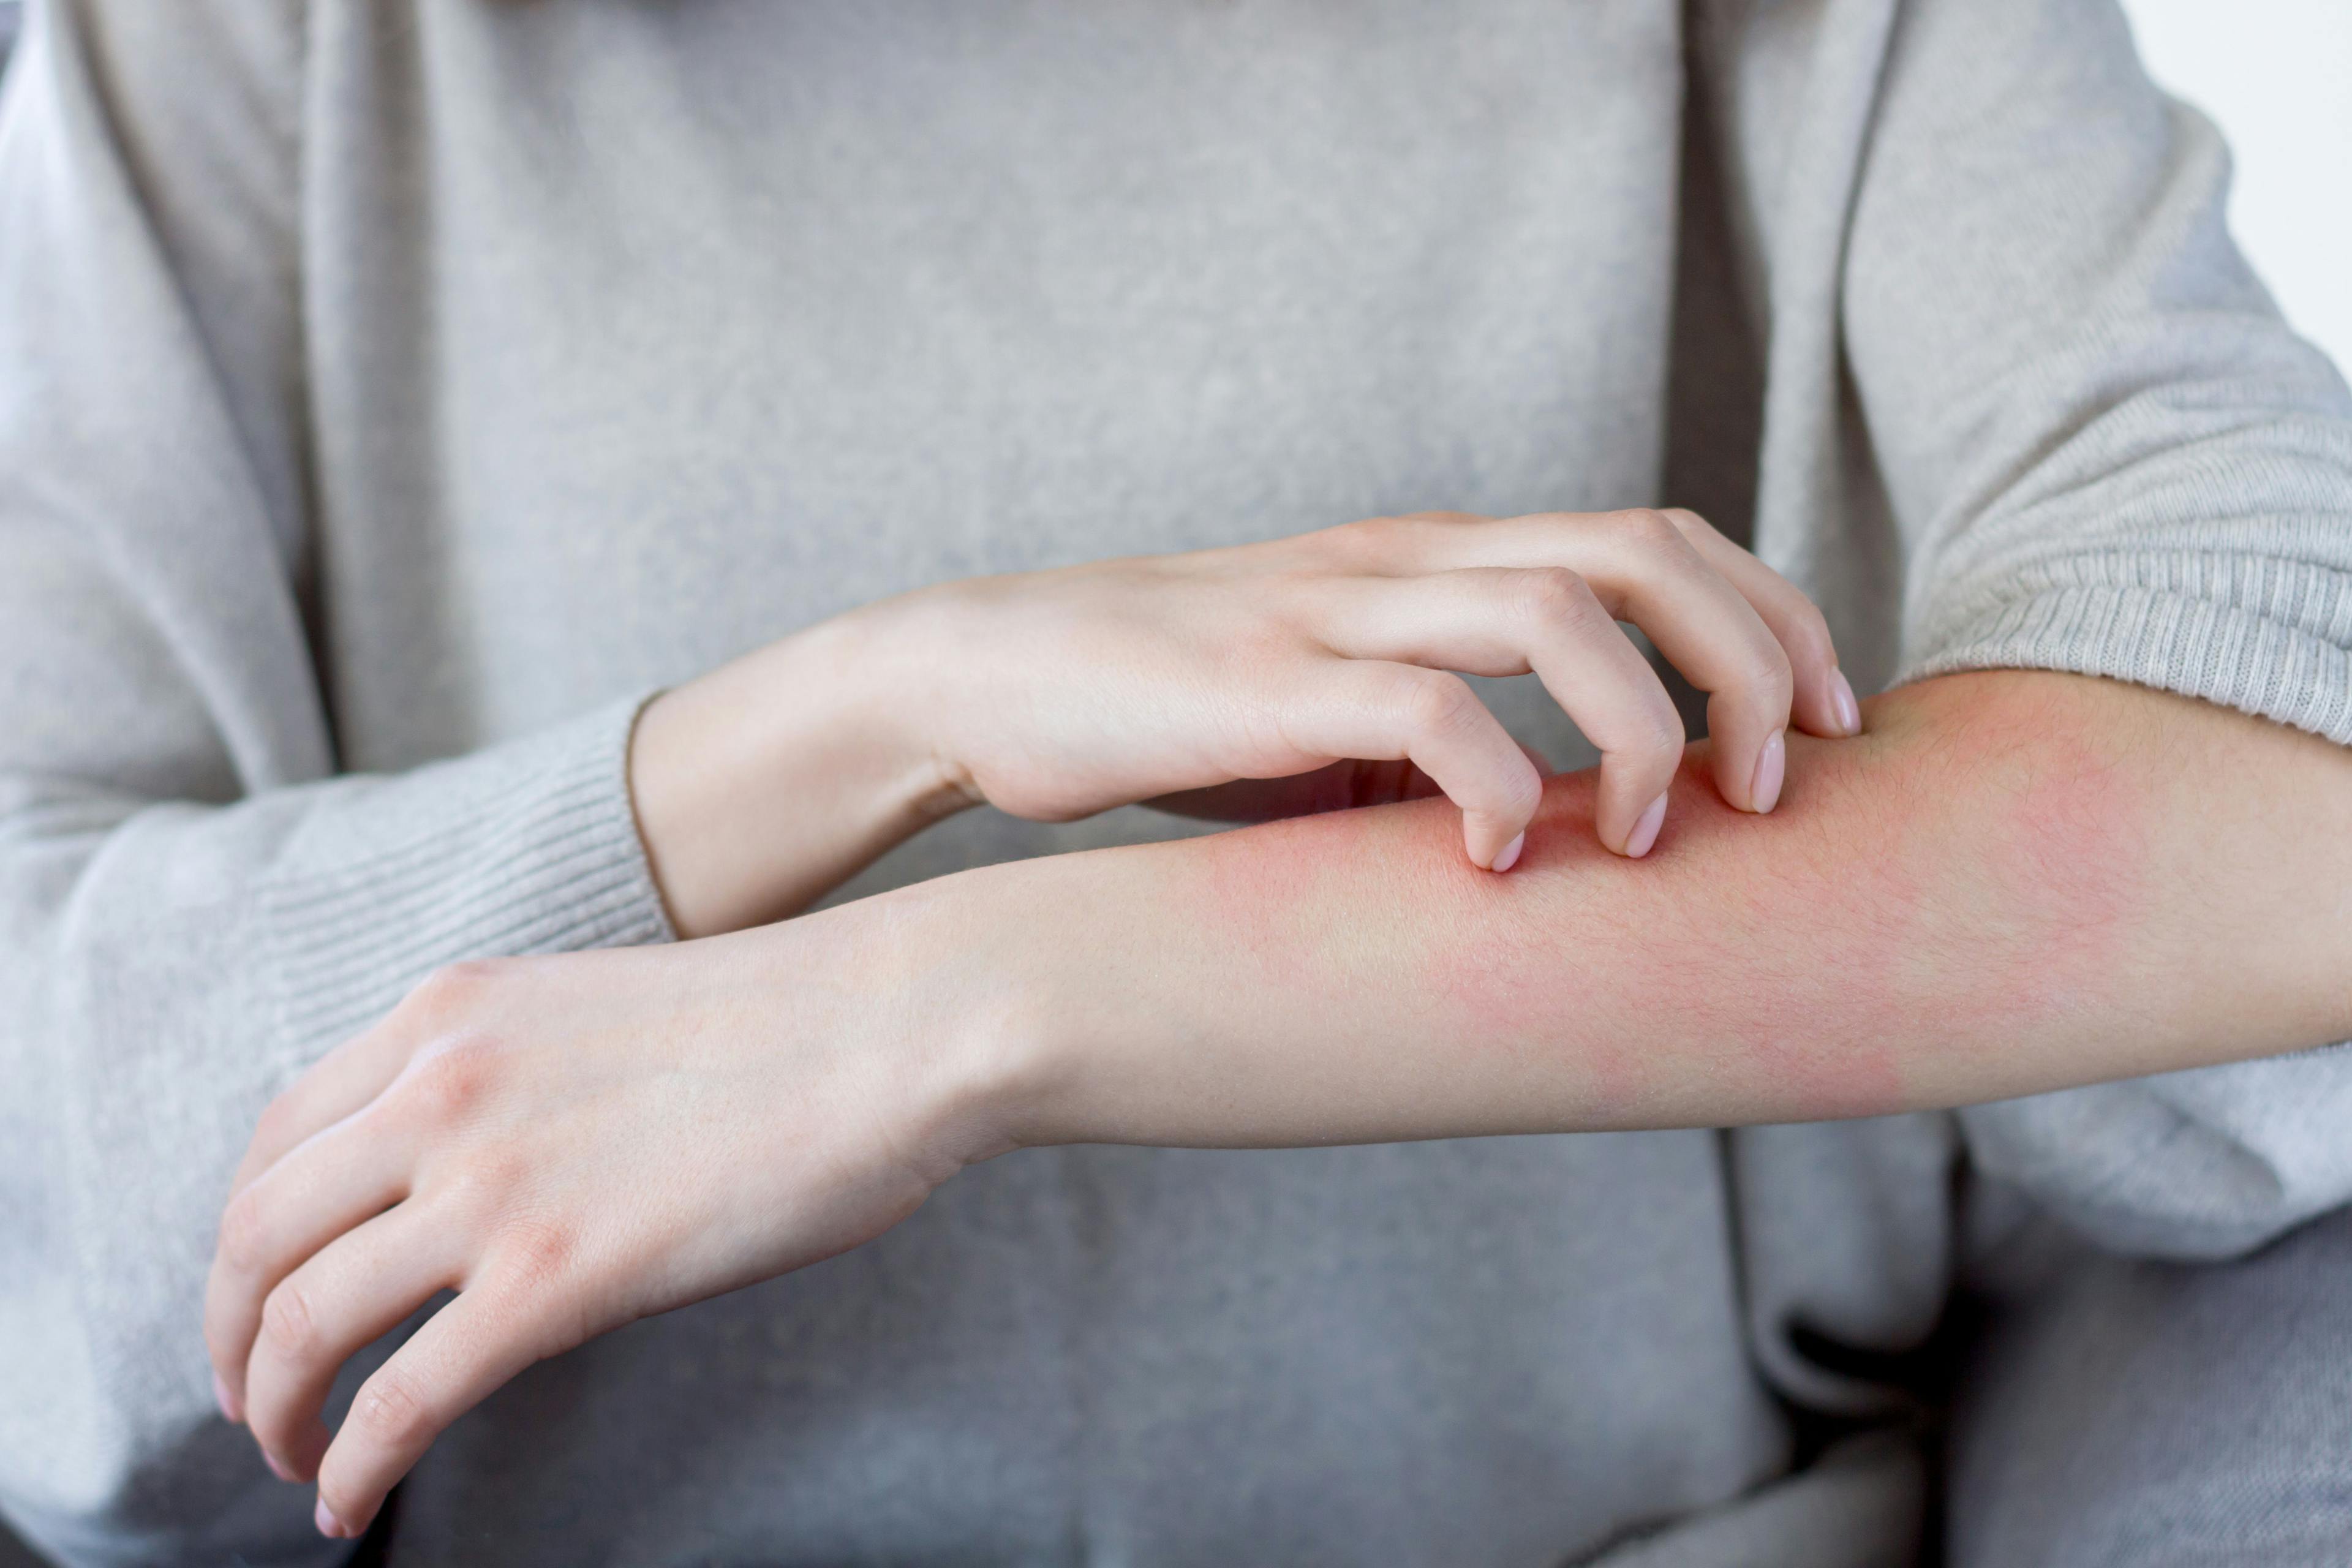 Woman scratching skin | Image credit: Monstar Studio - stock.adobe.com